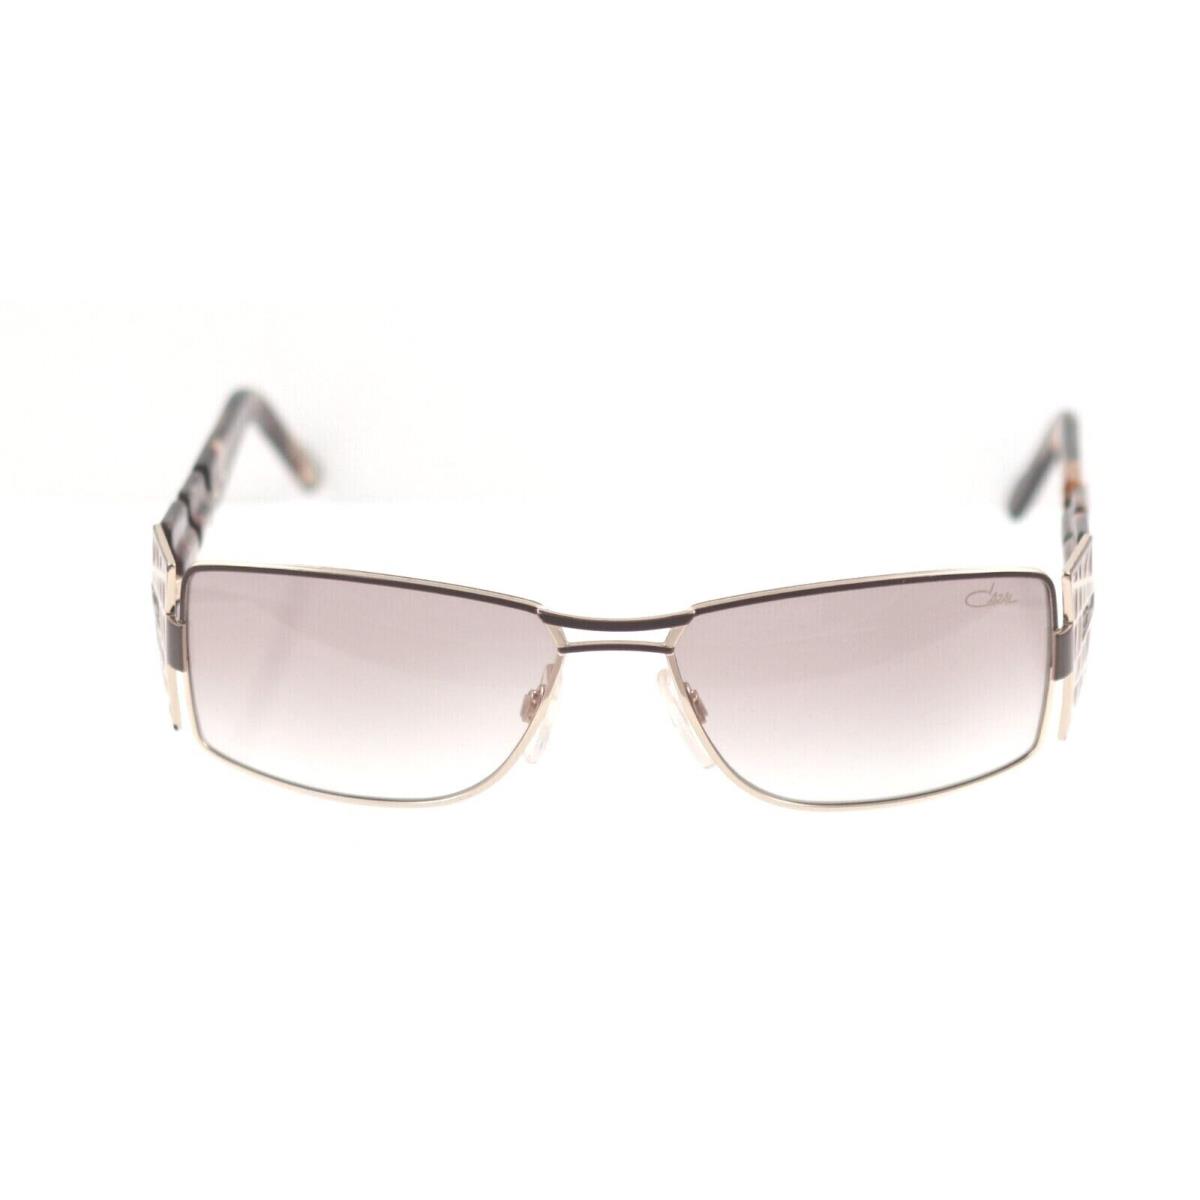 Cazal 9020 Sunglasses Women`s 003 Brown Gold 58-16-115 Retail